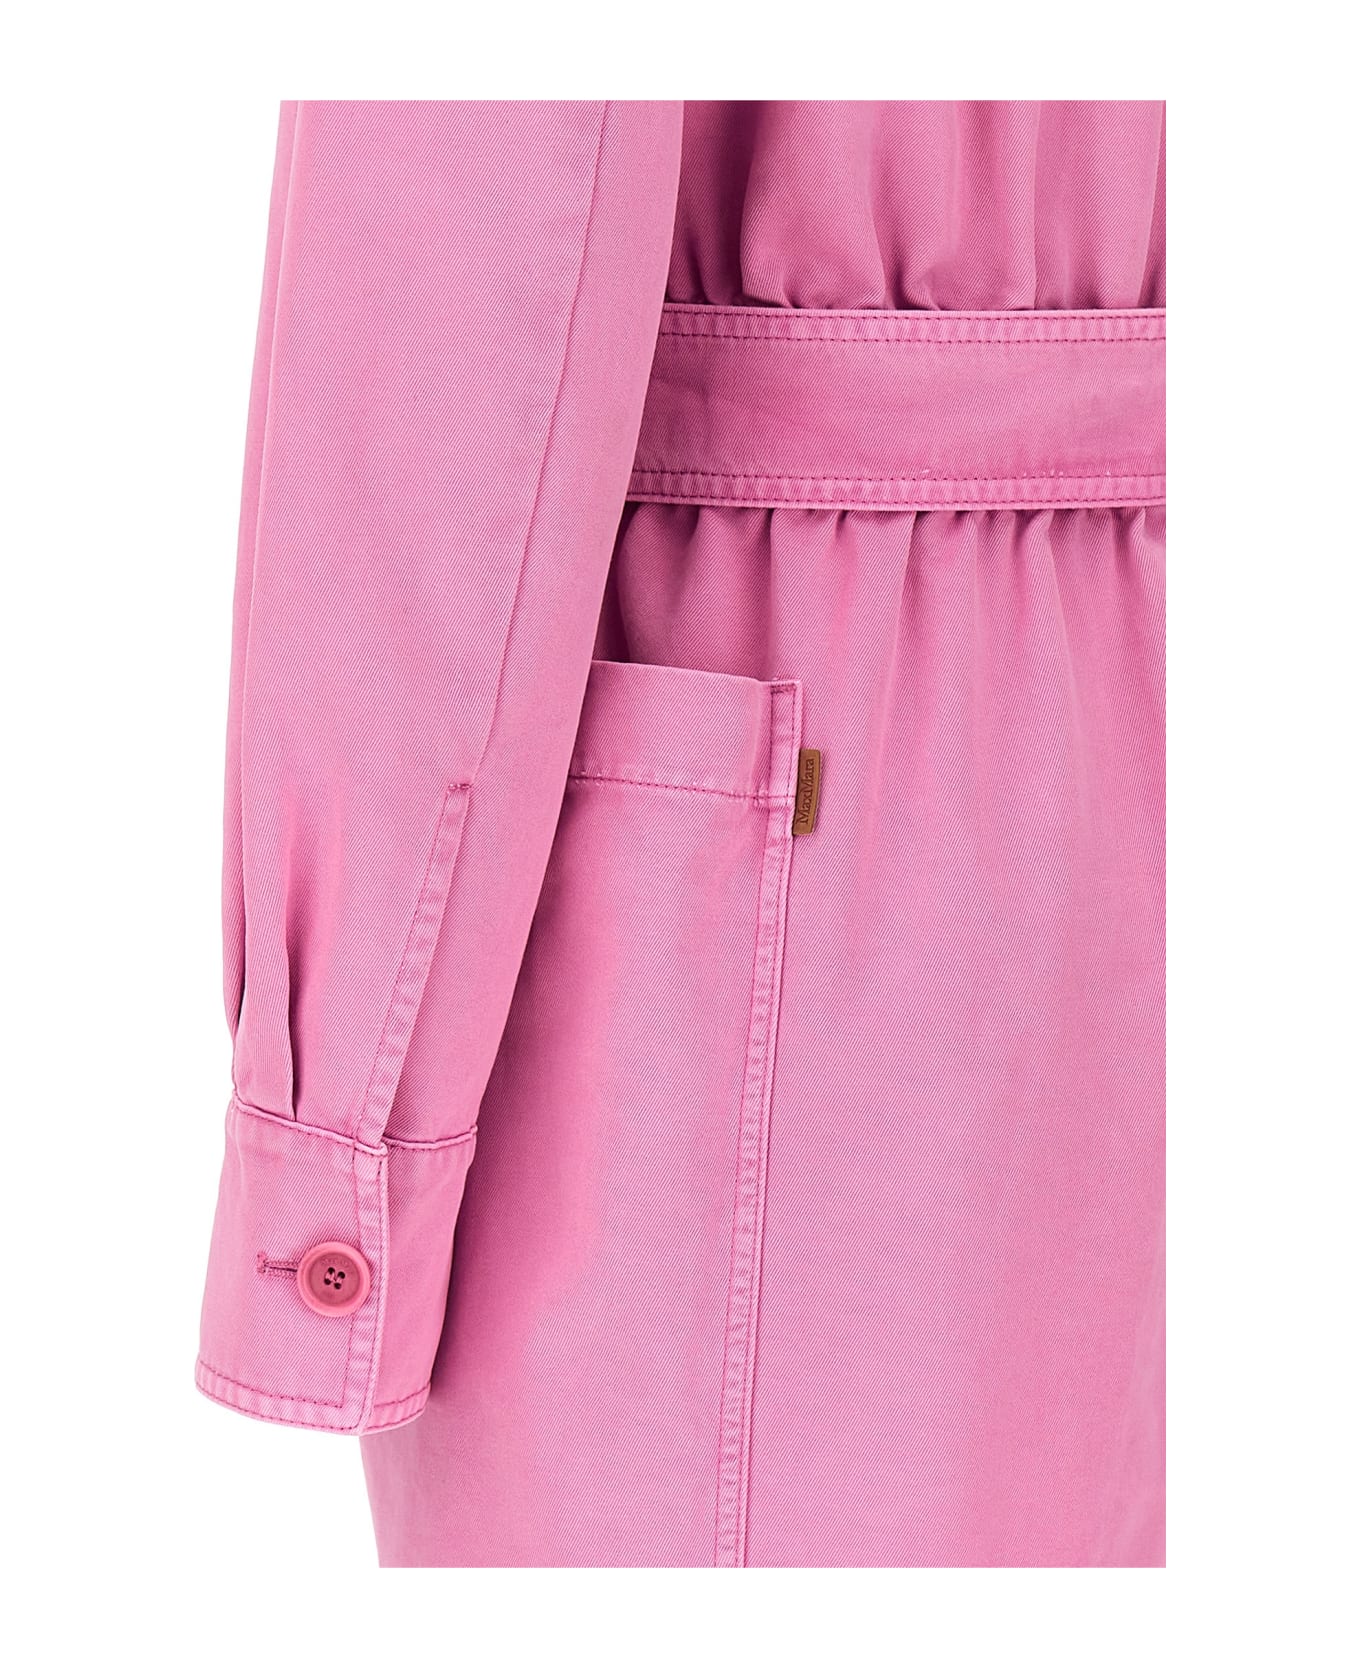 Max Mara 'visiera' Jumpsuit - Pink ジャンプスーツ